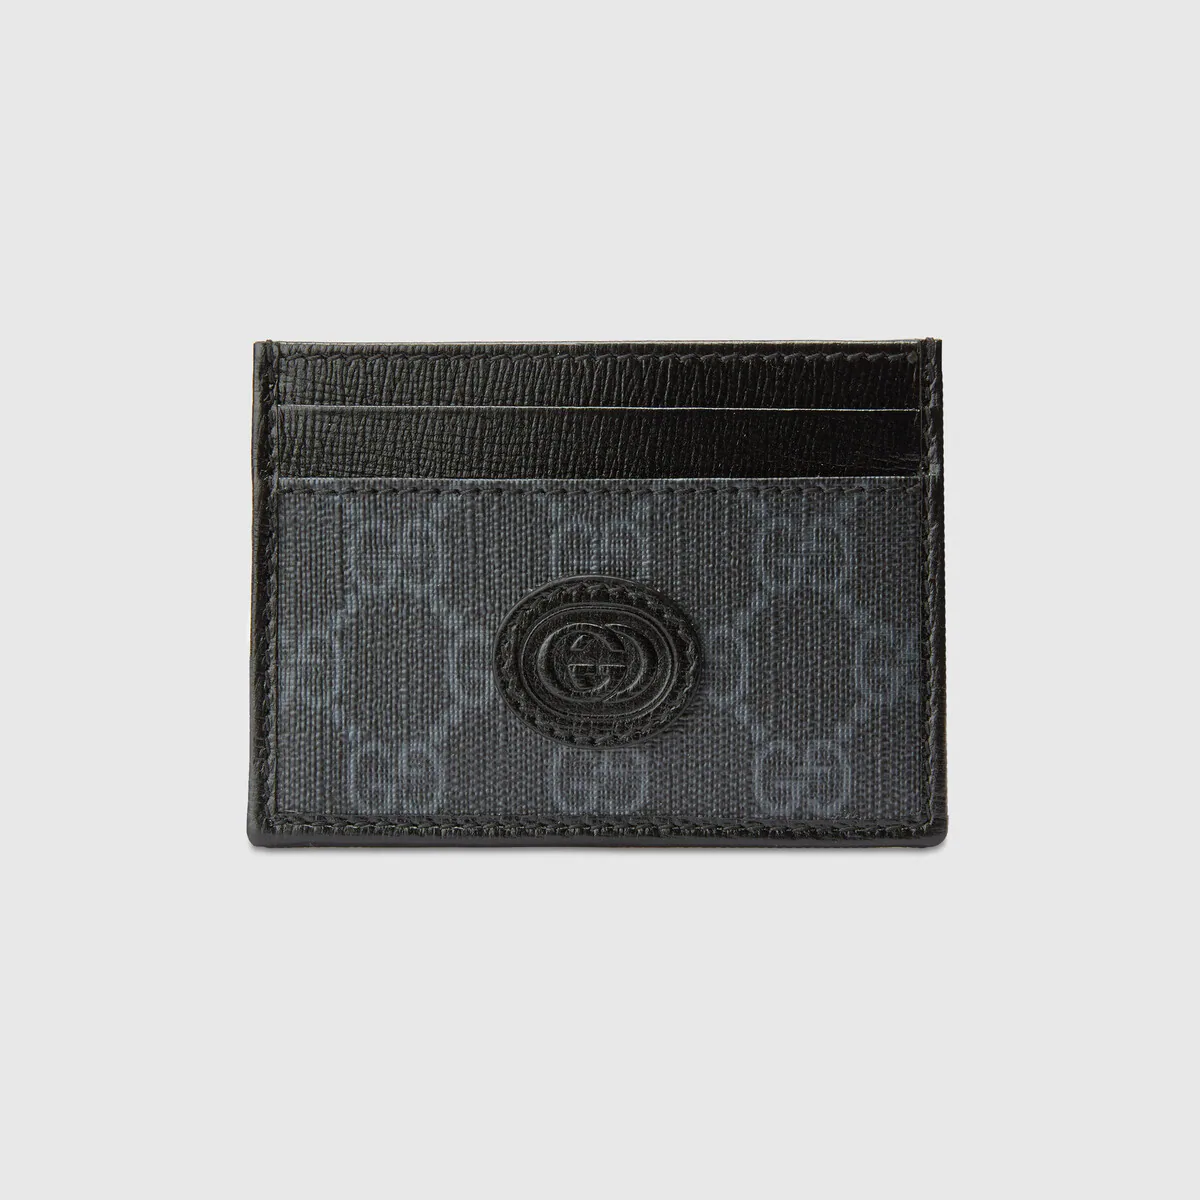 100% Brand new Gucci Card case with Interlocking G